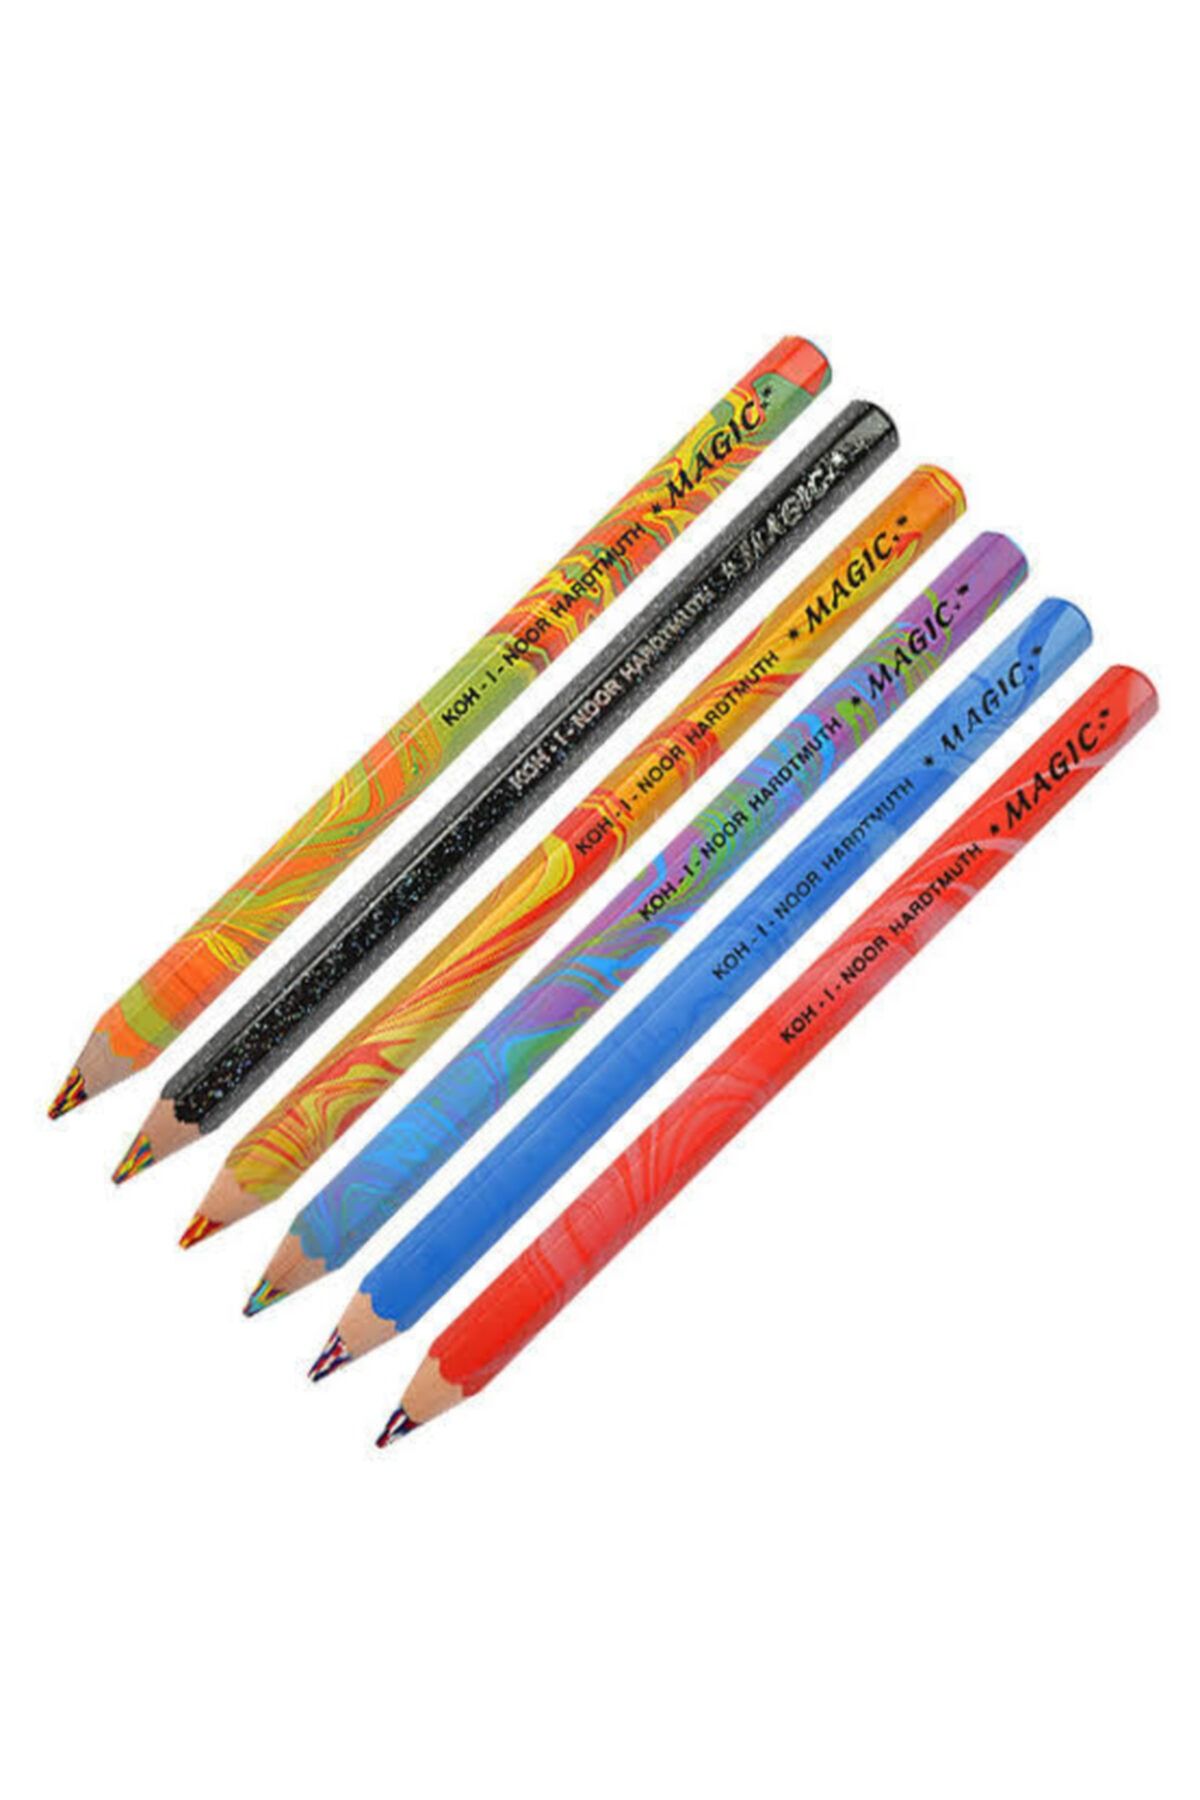 Magic pencil. Hardtmuth Koh-i-Noor ручка. Карандаши Koh-i-Noor Hardtmuth Magic. Koh i Noor Hardtmuth ручка карандаш. Кохинур Мэджик карандаш.